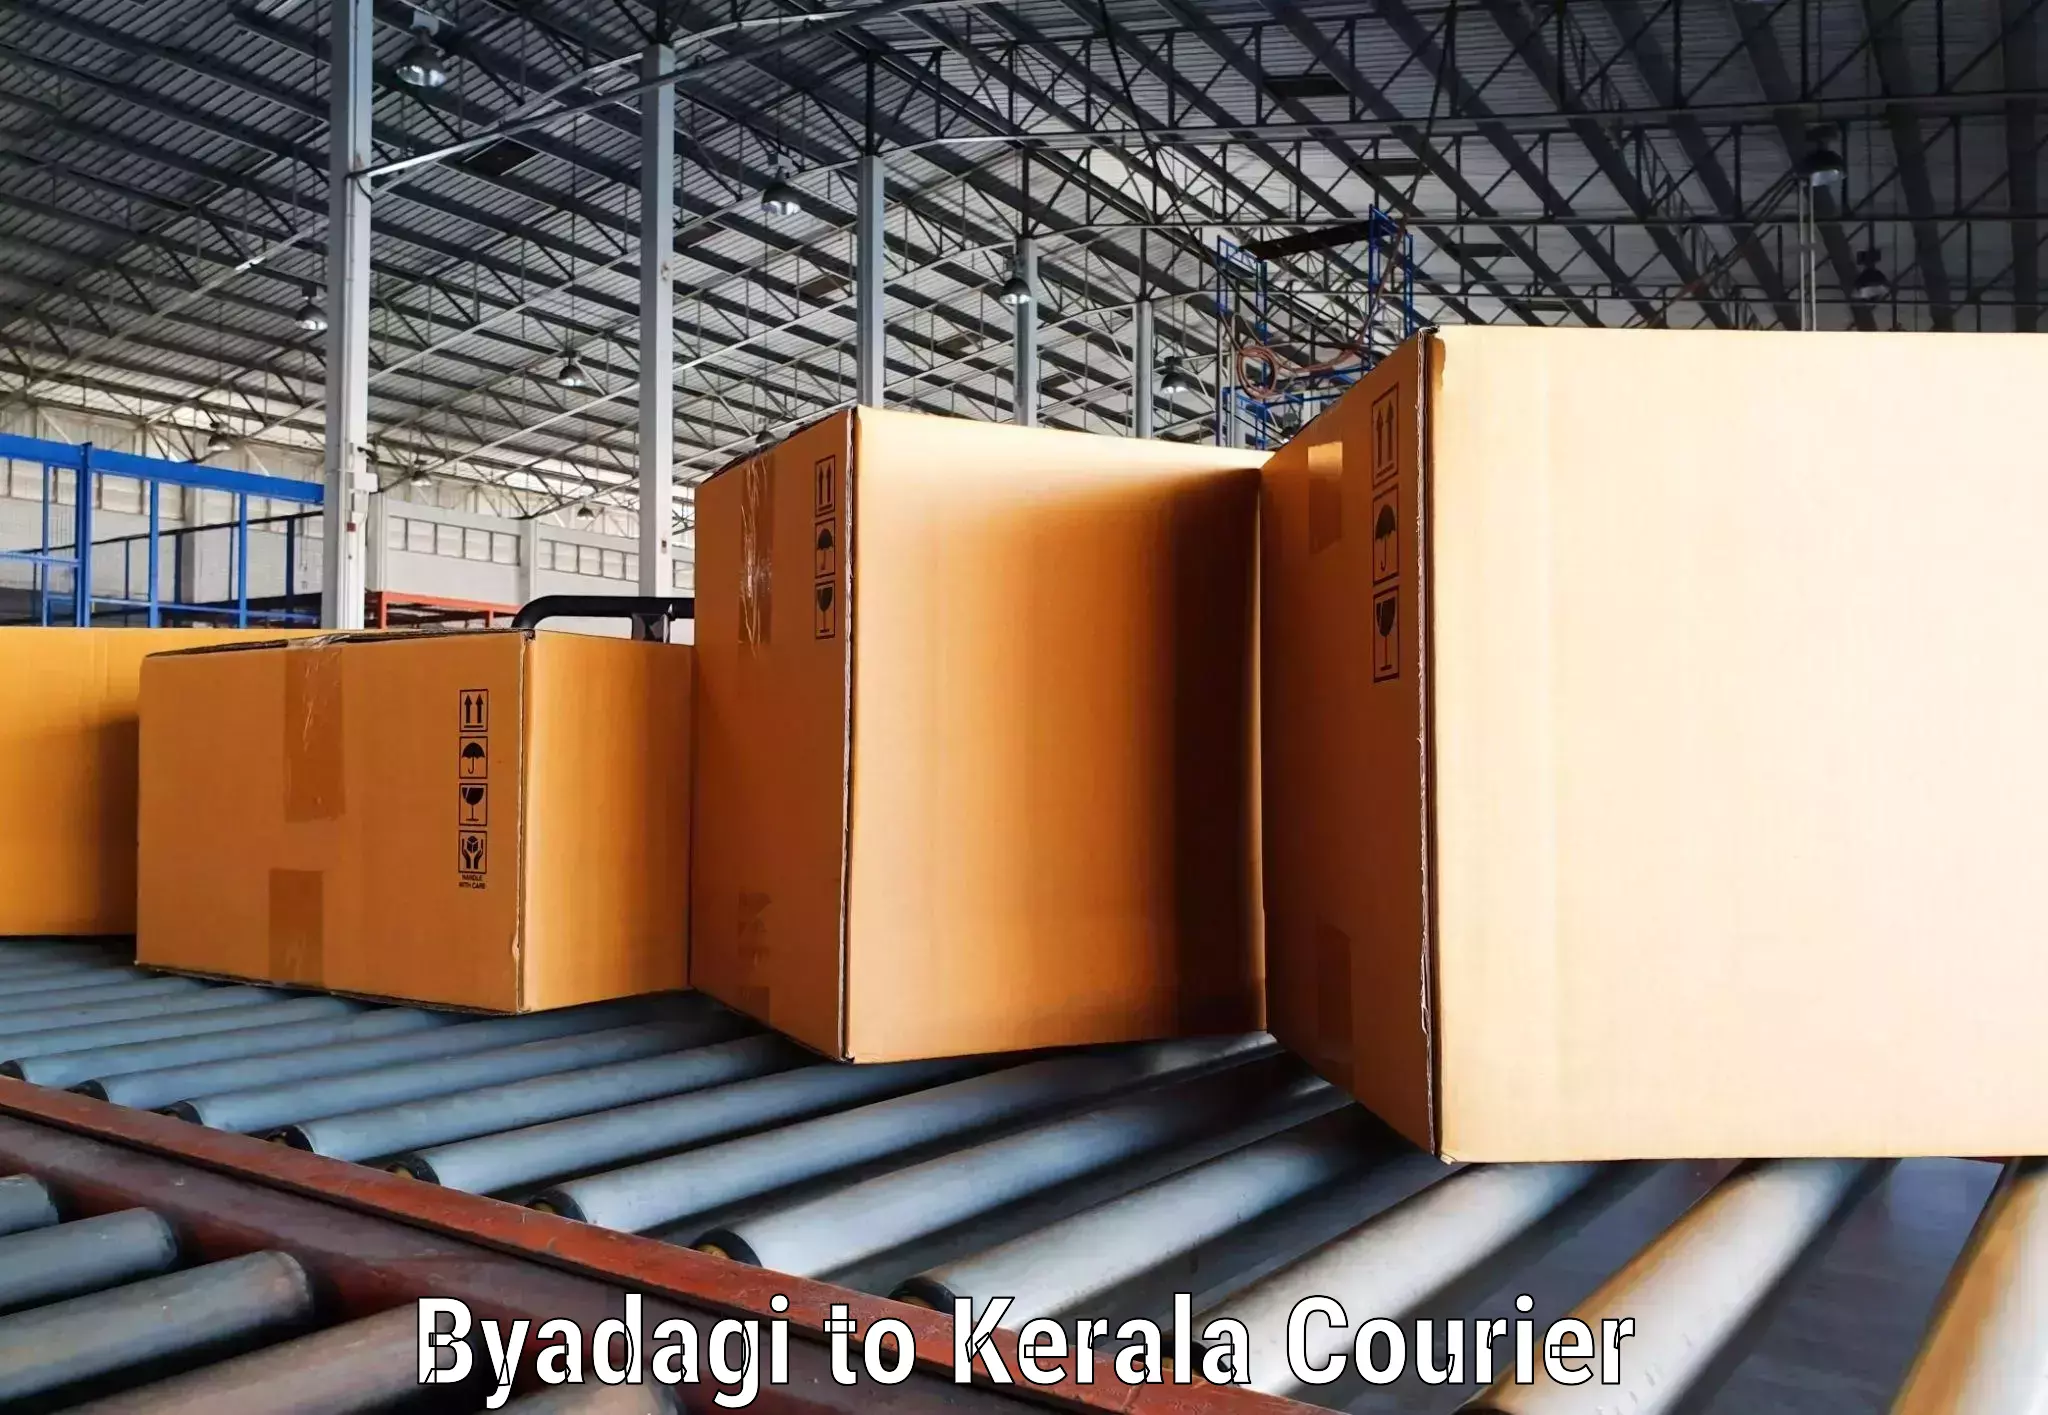 Enhanced tracking features Byadagi to Kerala